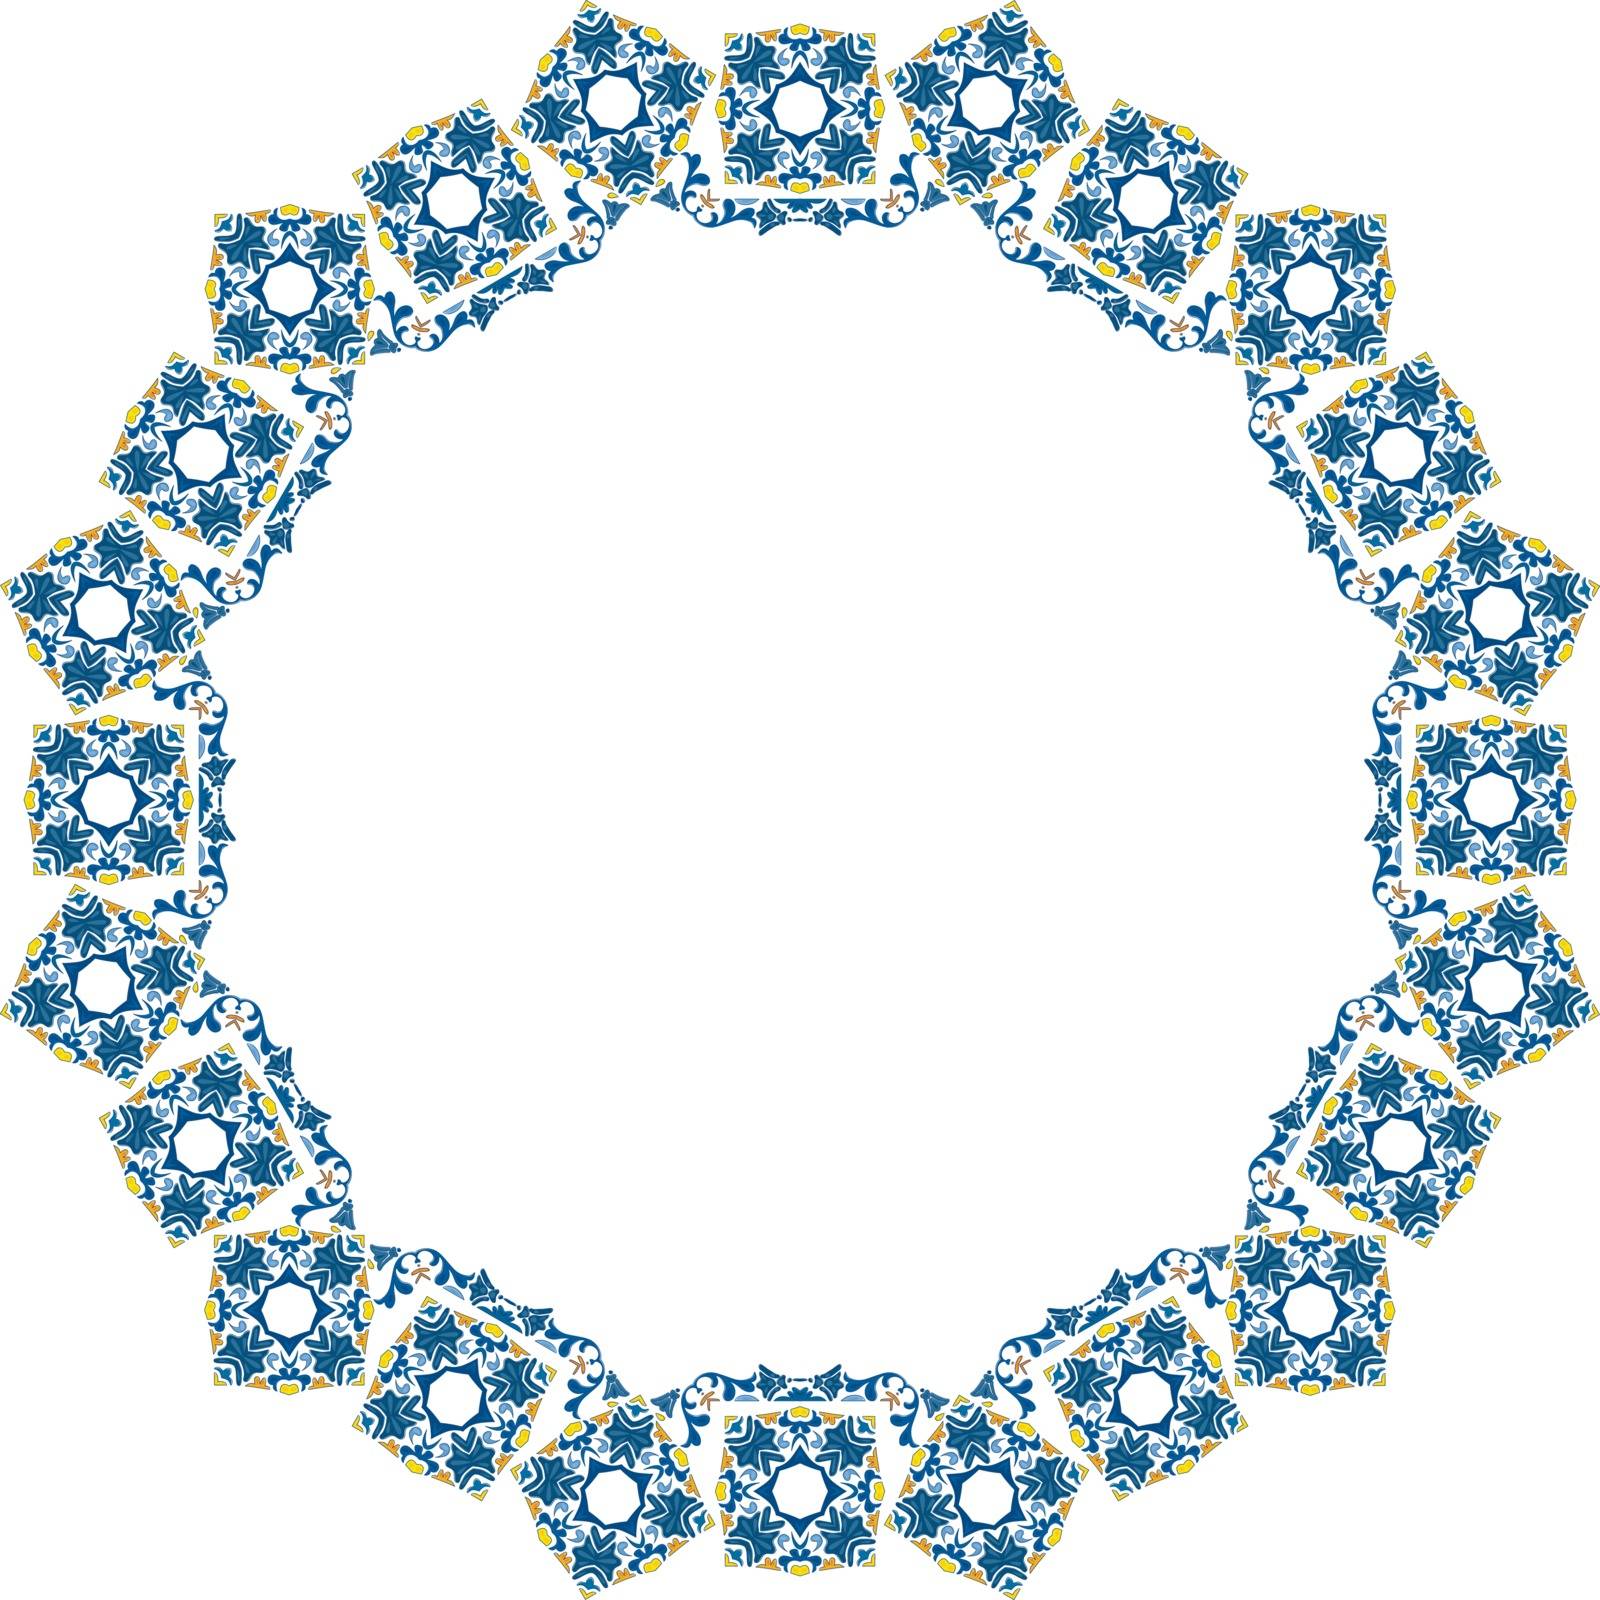 Decorative illustrated circle frame made of blue and orange elements